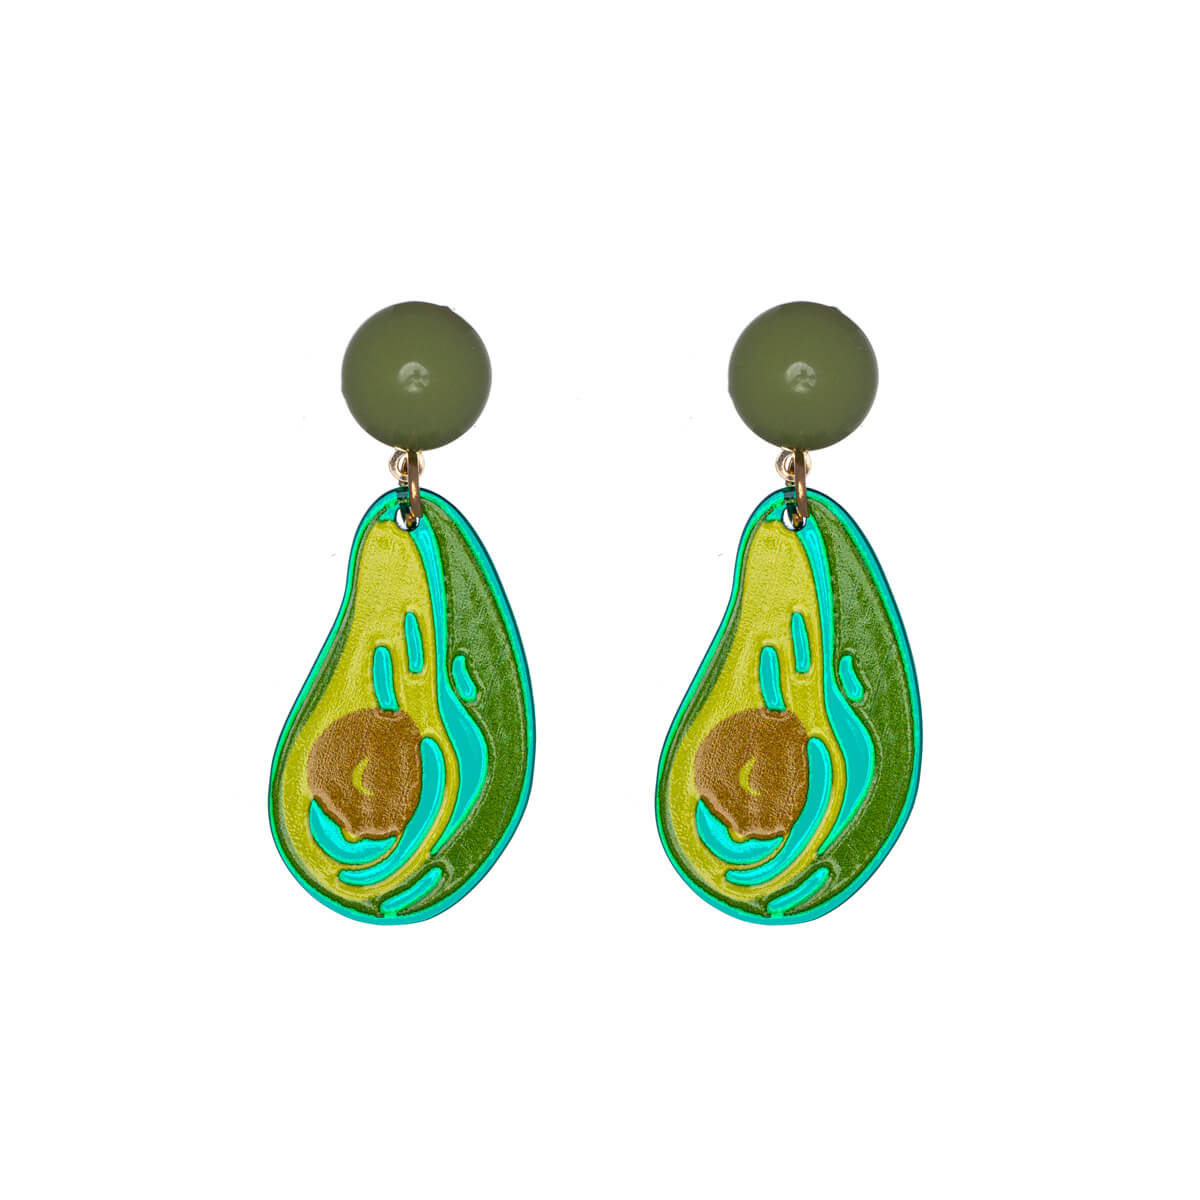 Plastic avocado earrings